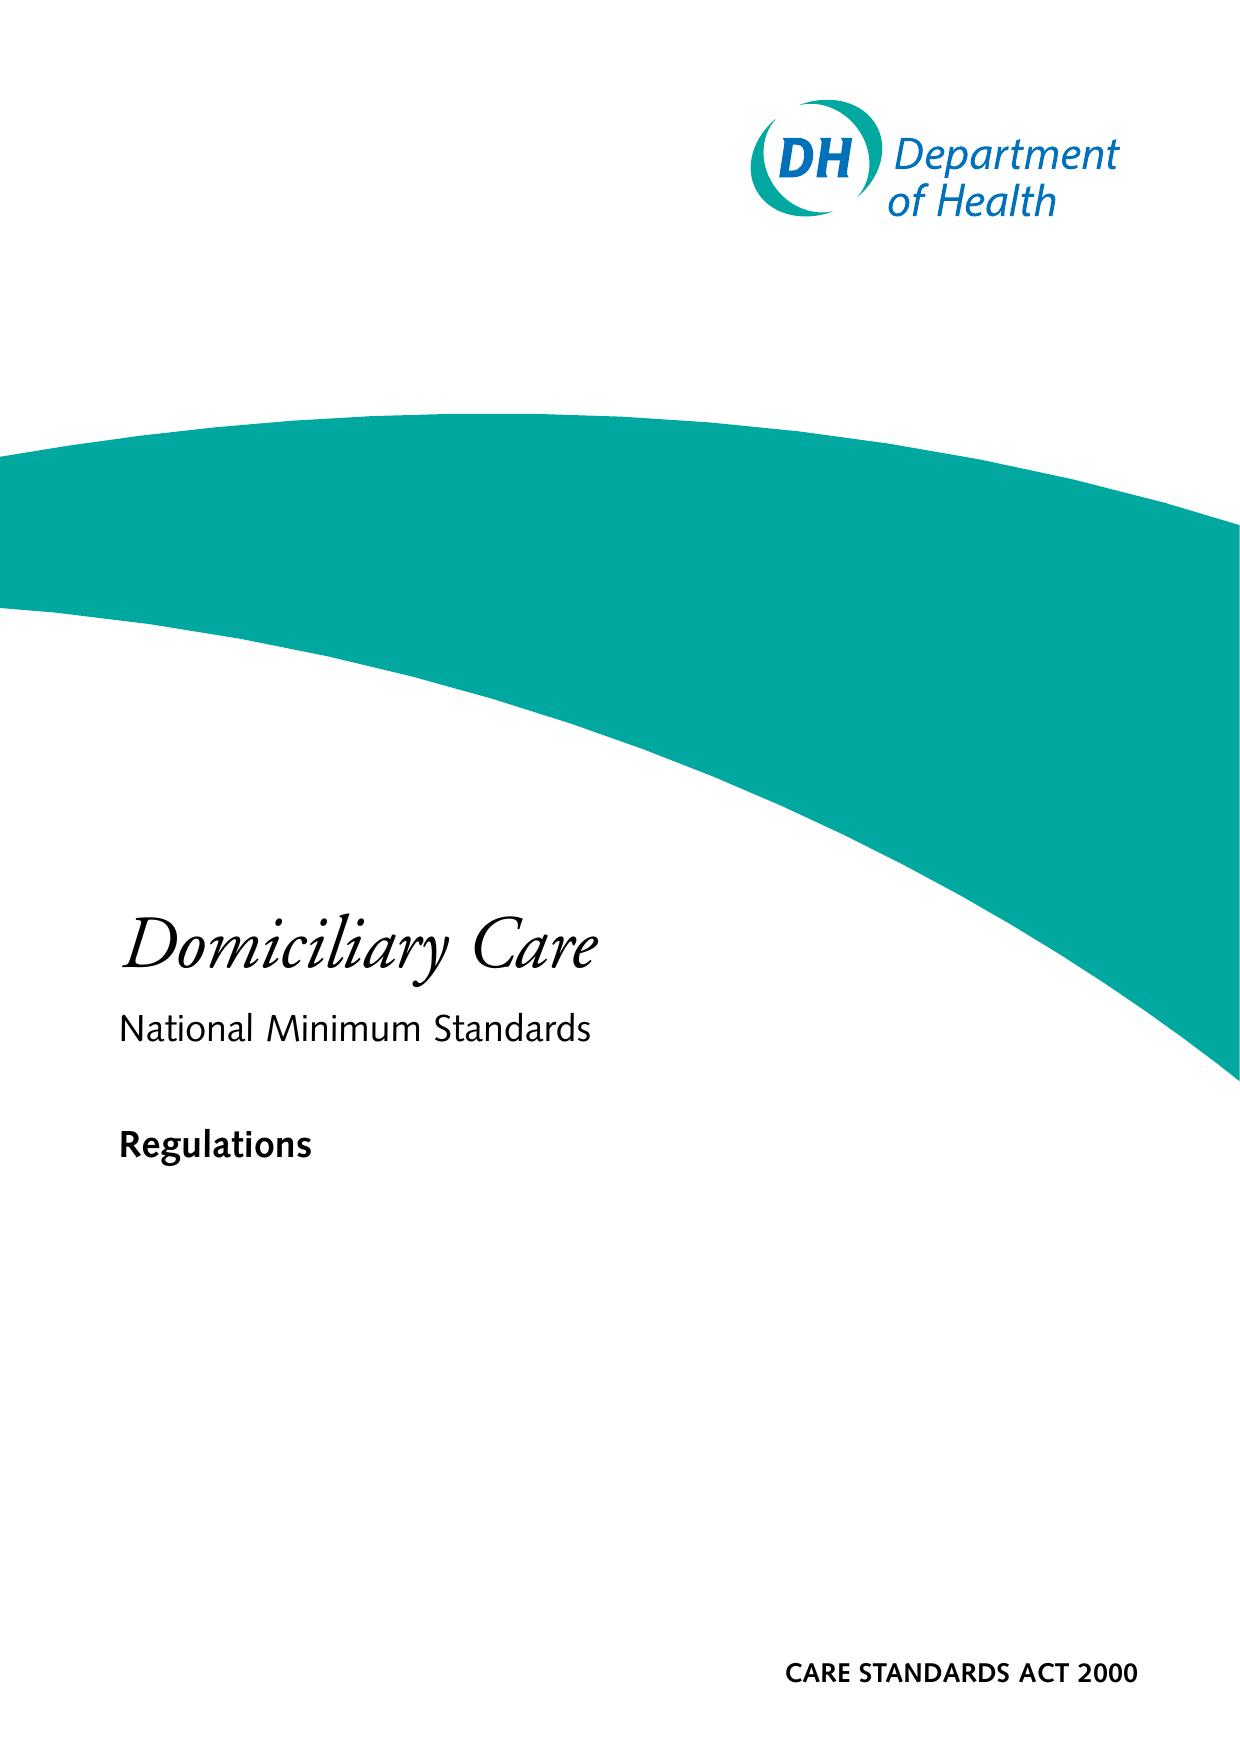 Domiciliary Care National Minimum Standards